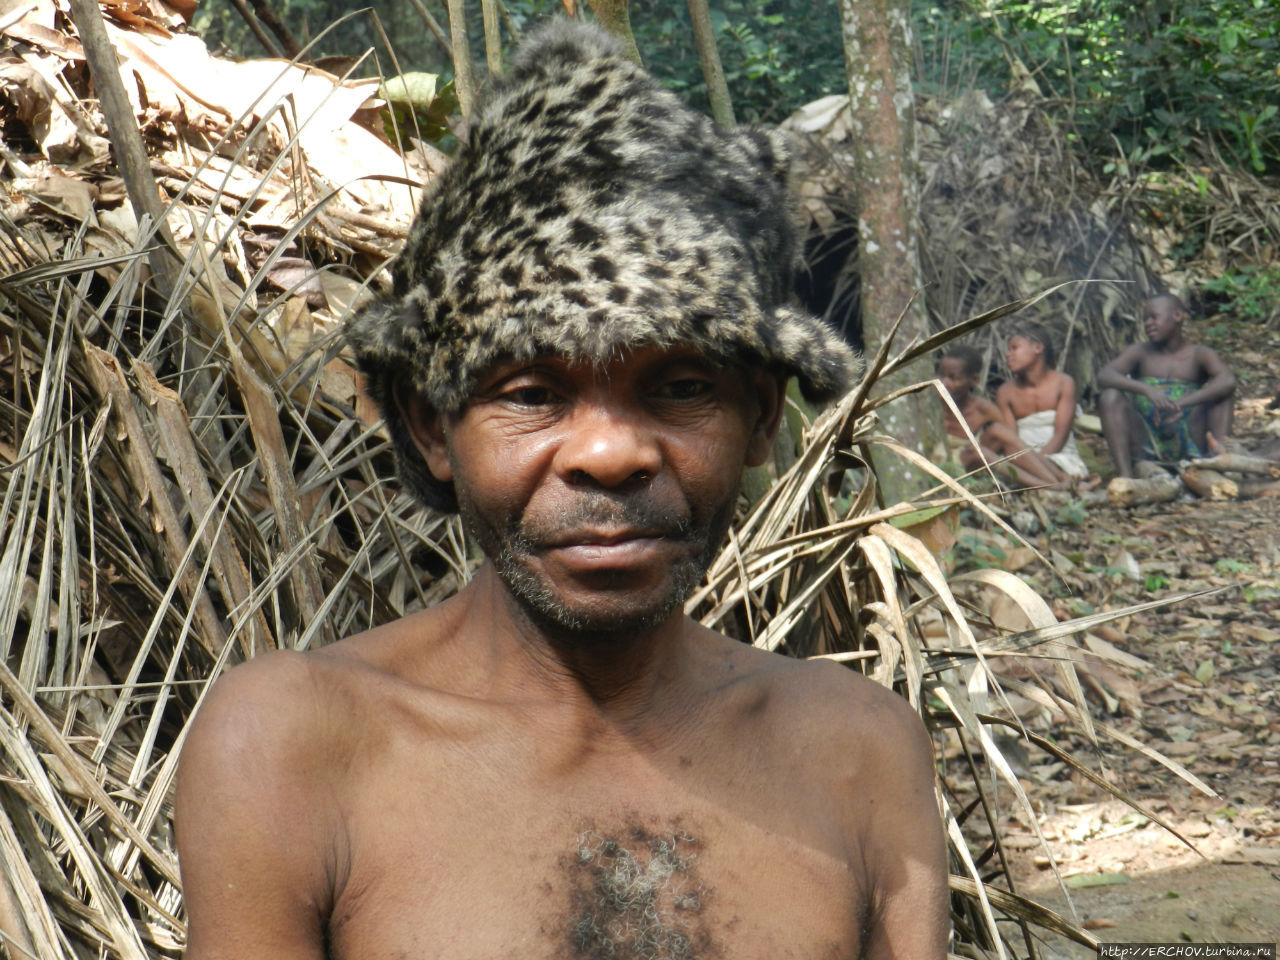 Камерун. Ч — 17. Пигмеи Бака и заповедник Джа Центральный регион, Камерун